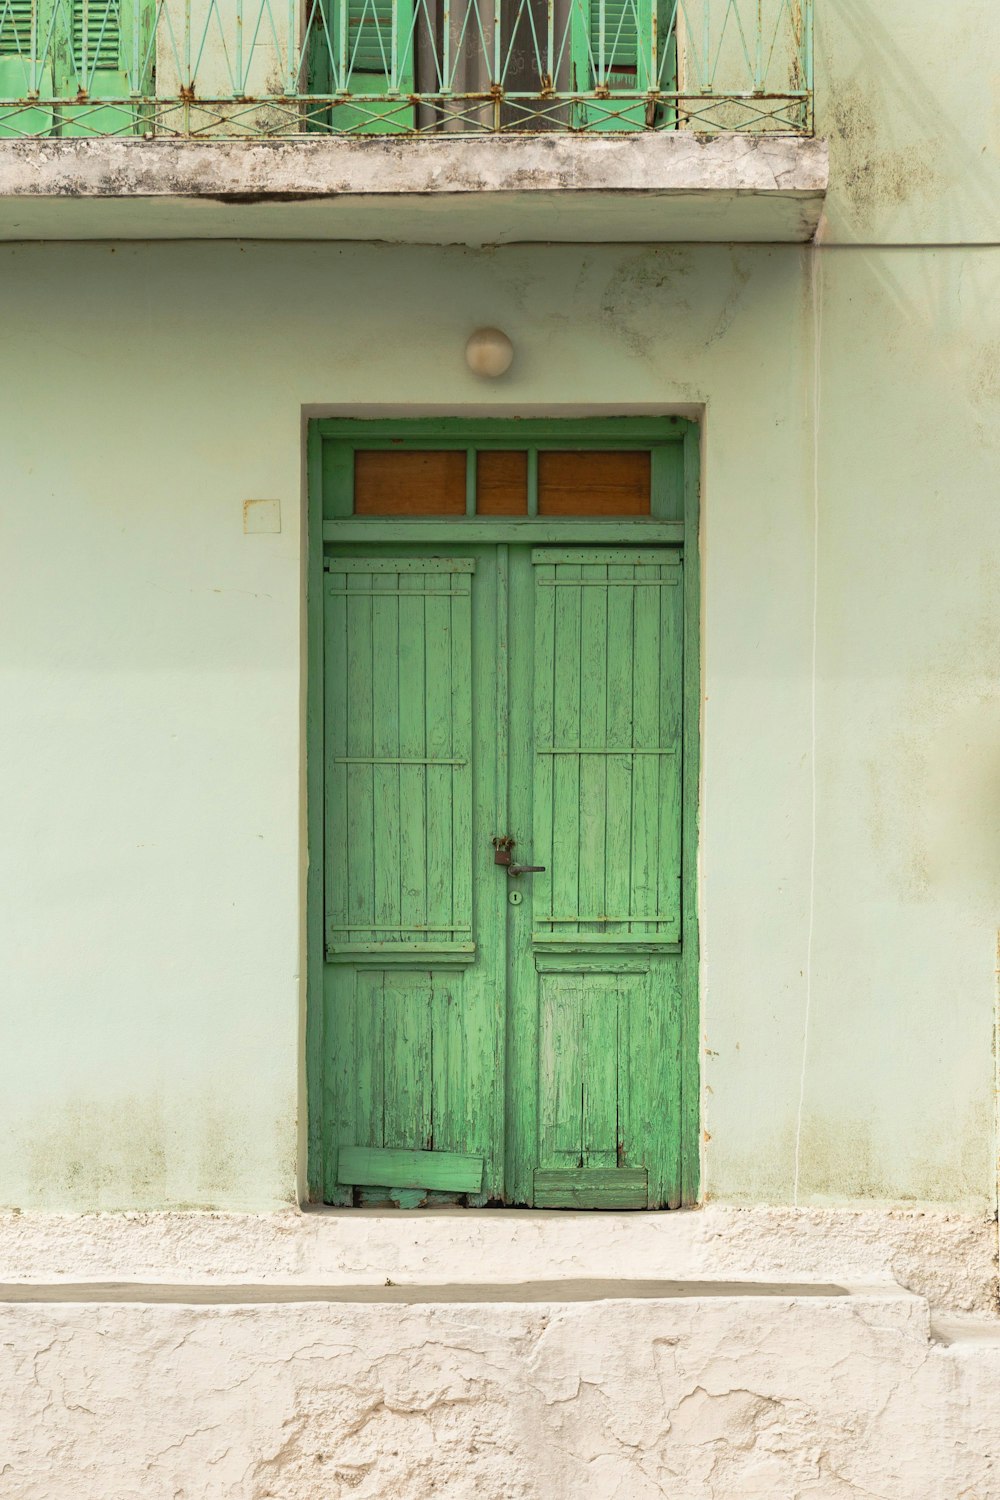 a green door is open on a building